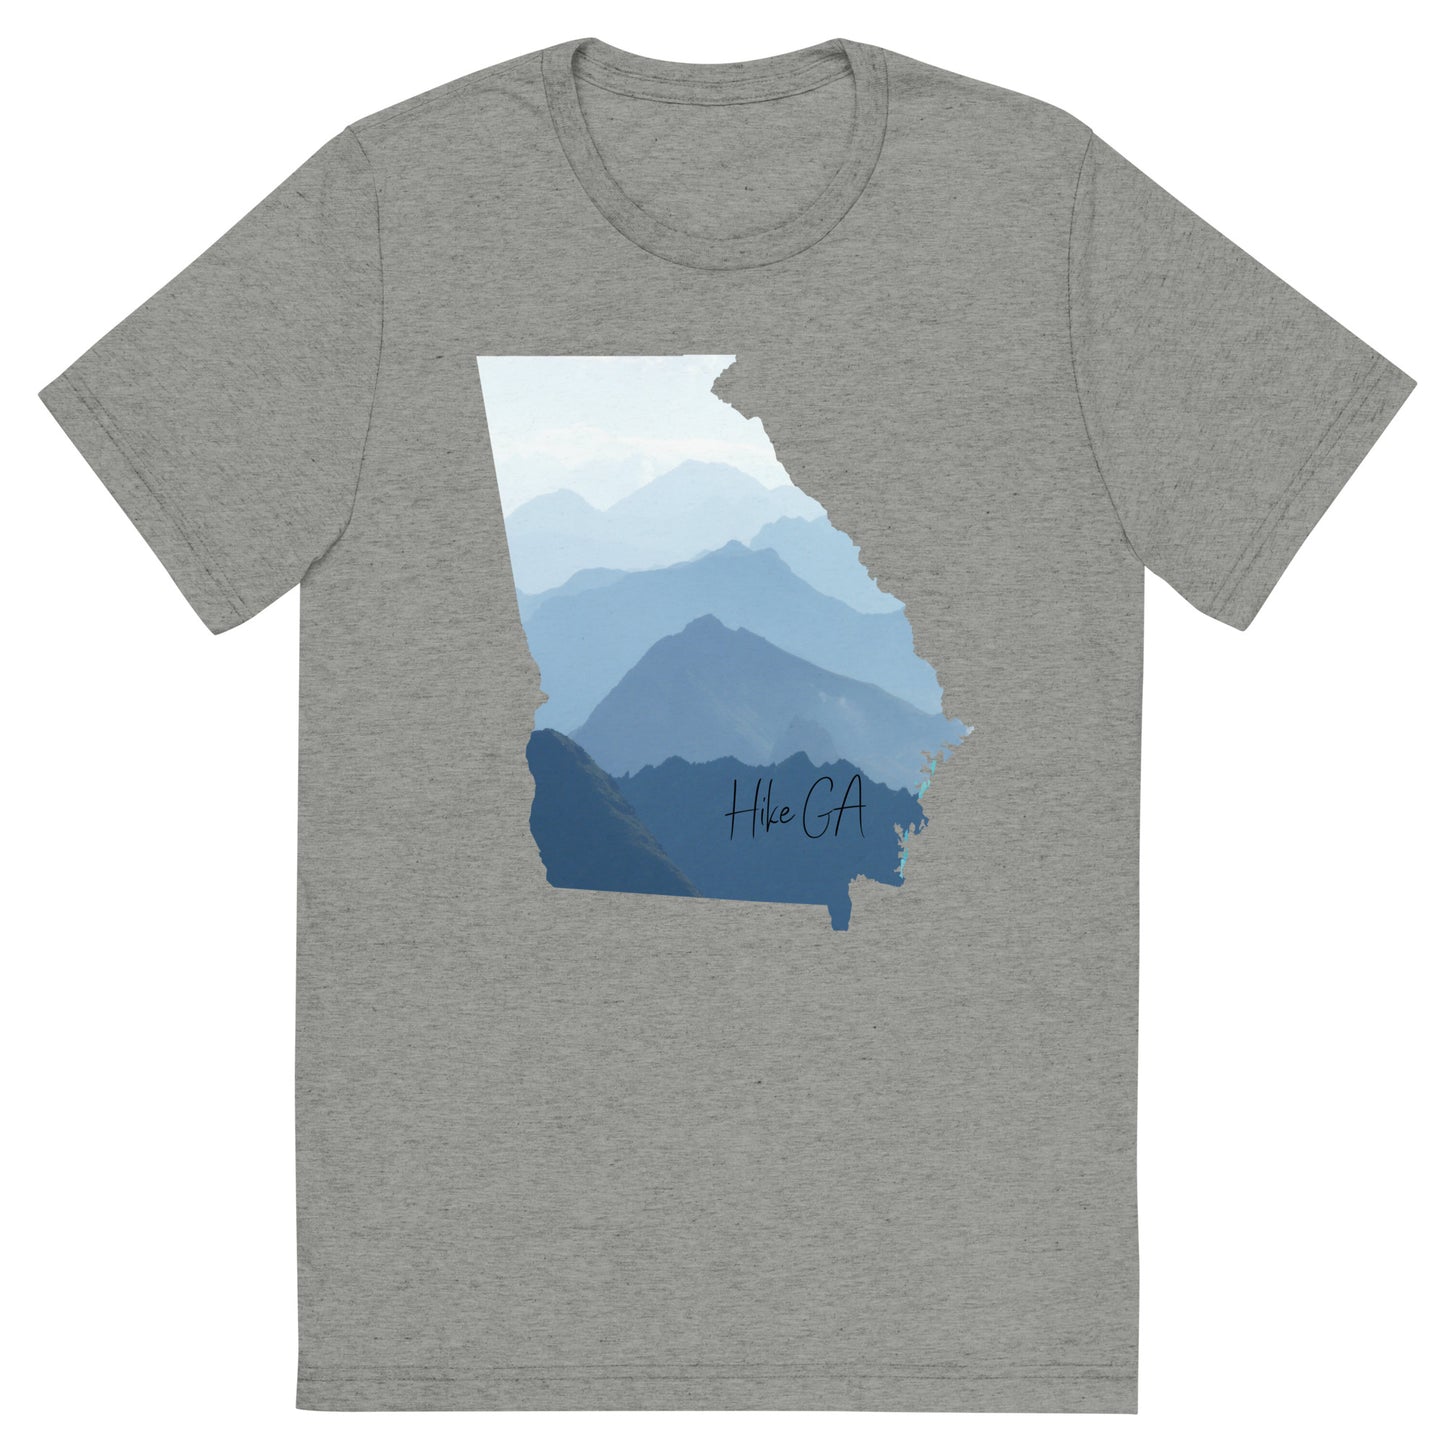 Hike GA - Unisex Tri-blend - Short sleeve t-shirt